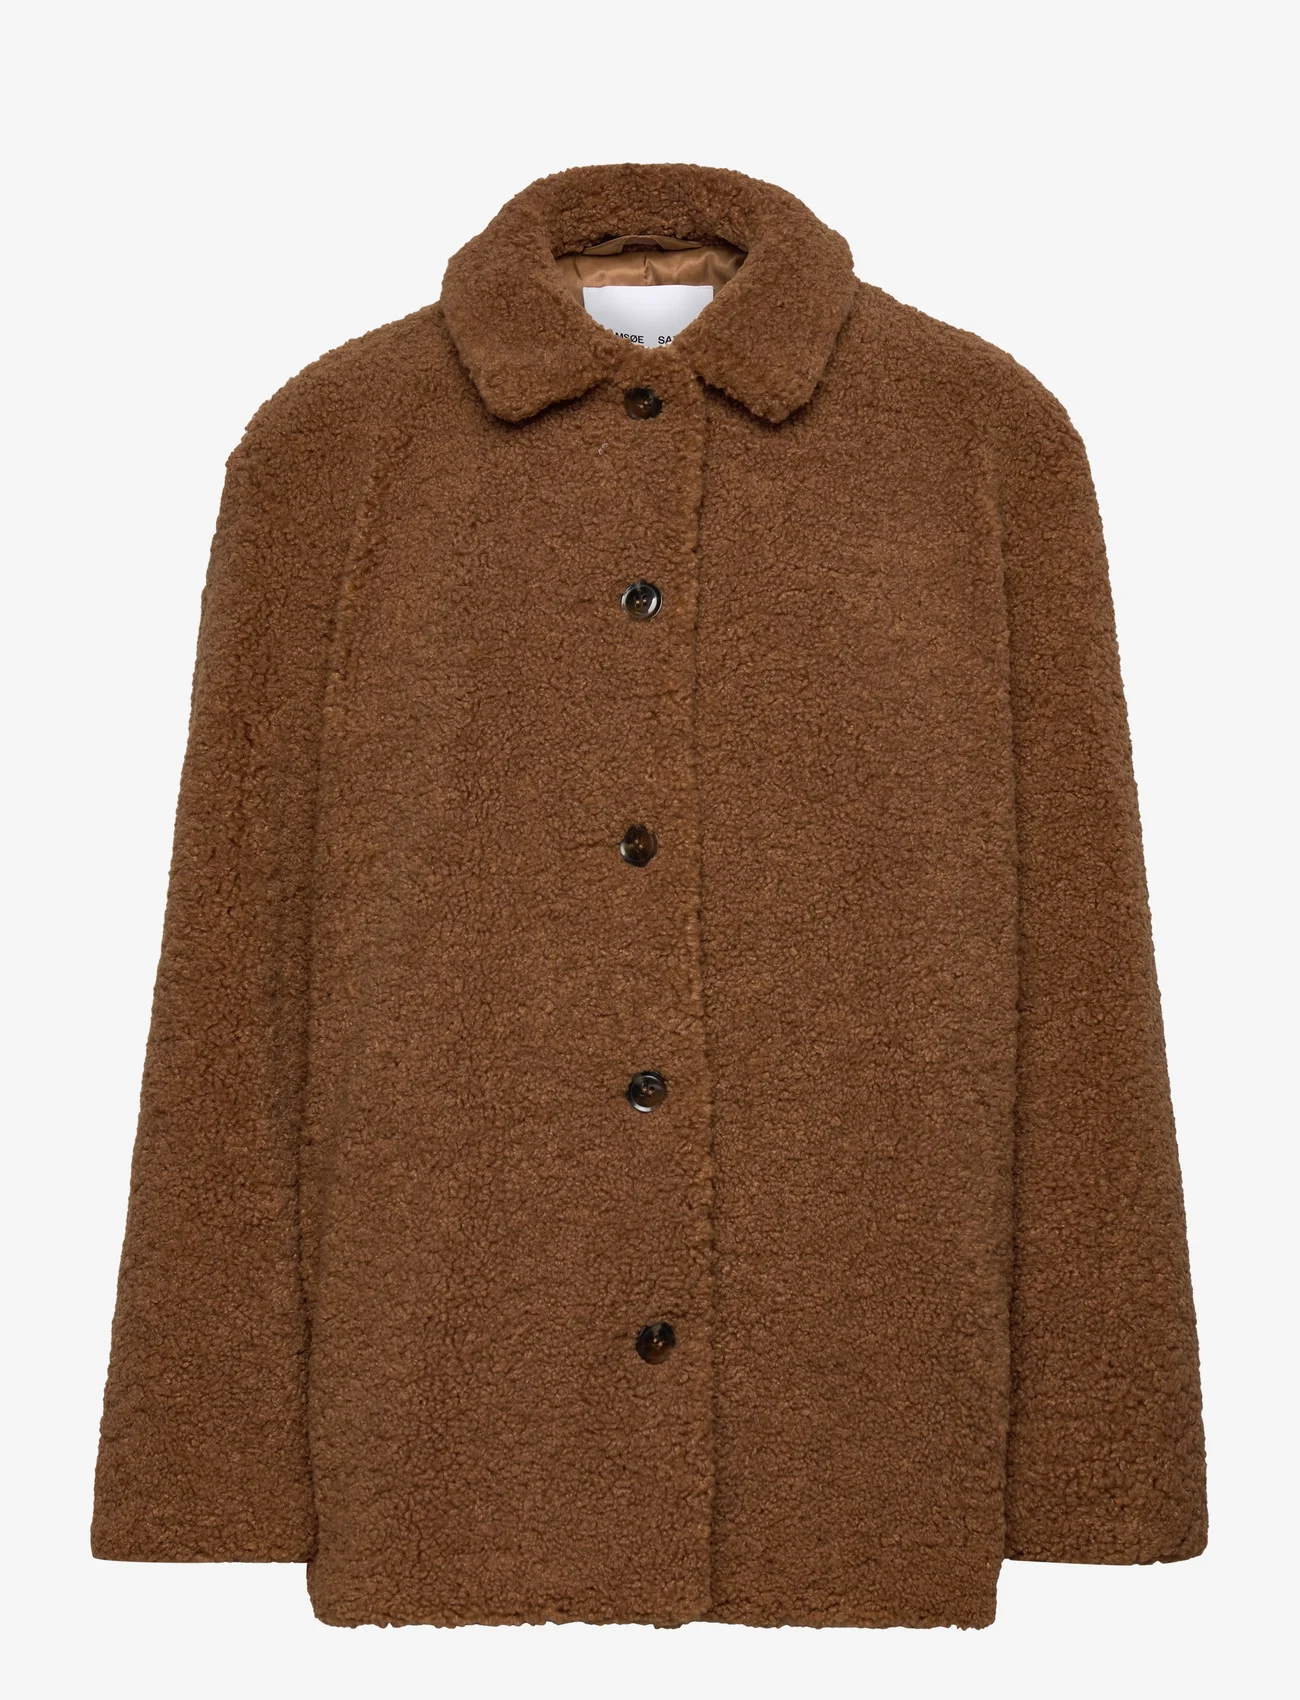 Samsøe Samsøe - Silvia jacket 13181 - fake fur jakker - tobacco brown - 0